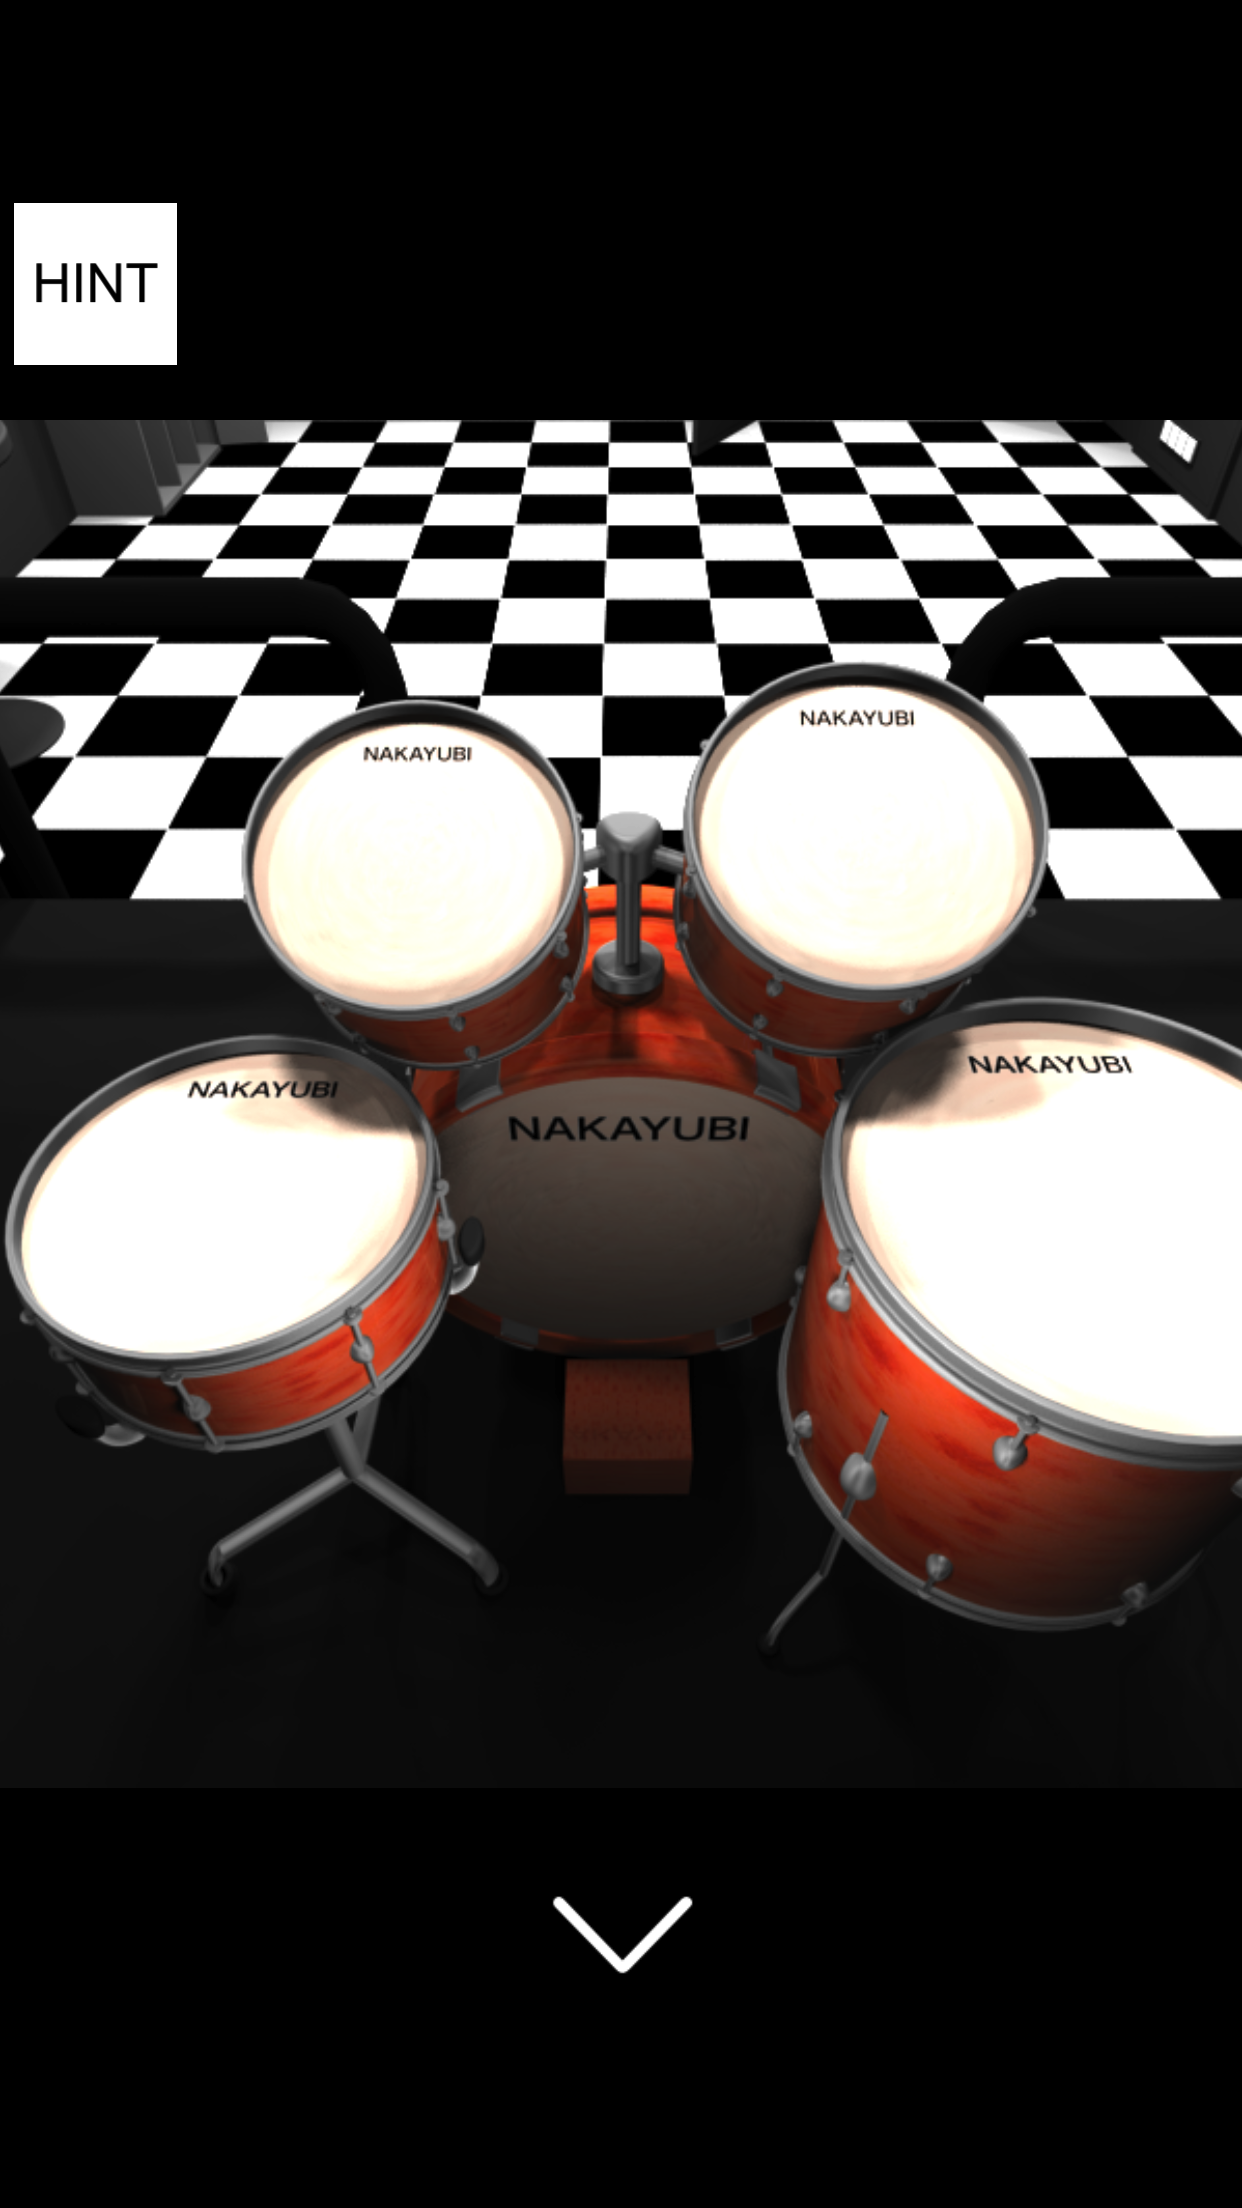 Screenshot 1 of Escape Game-Music Club 2.3